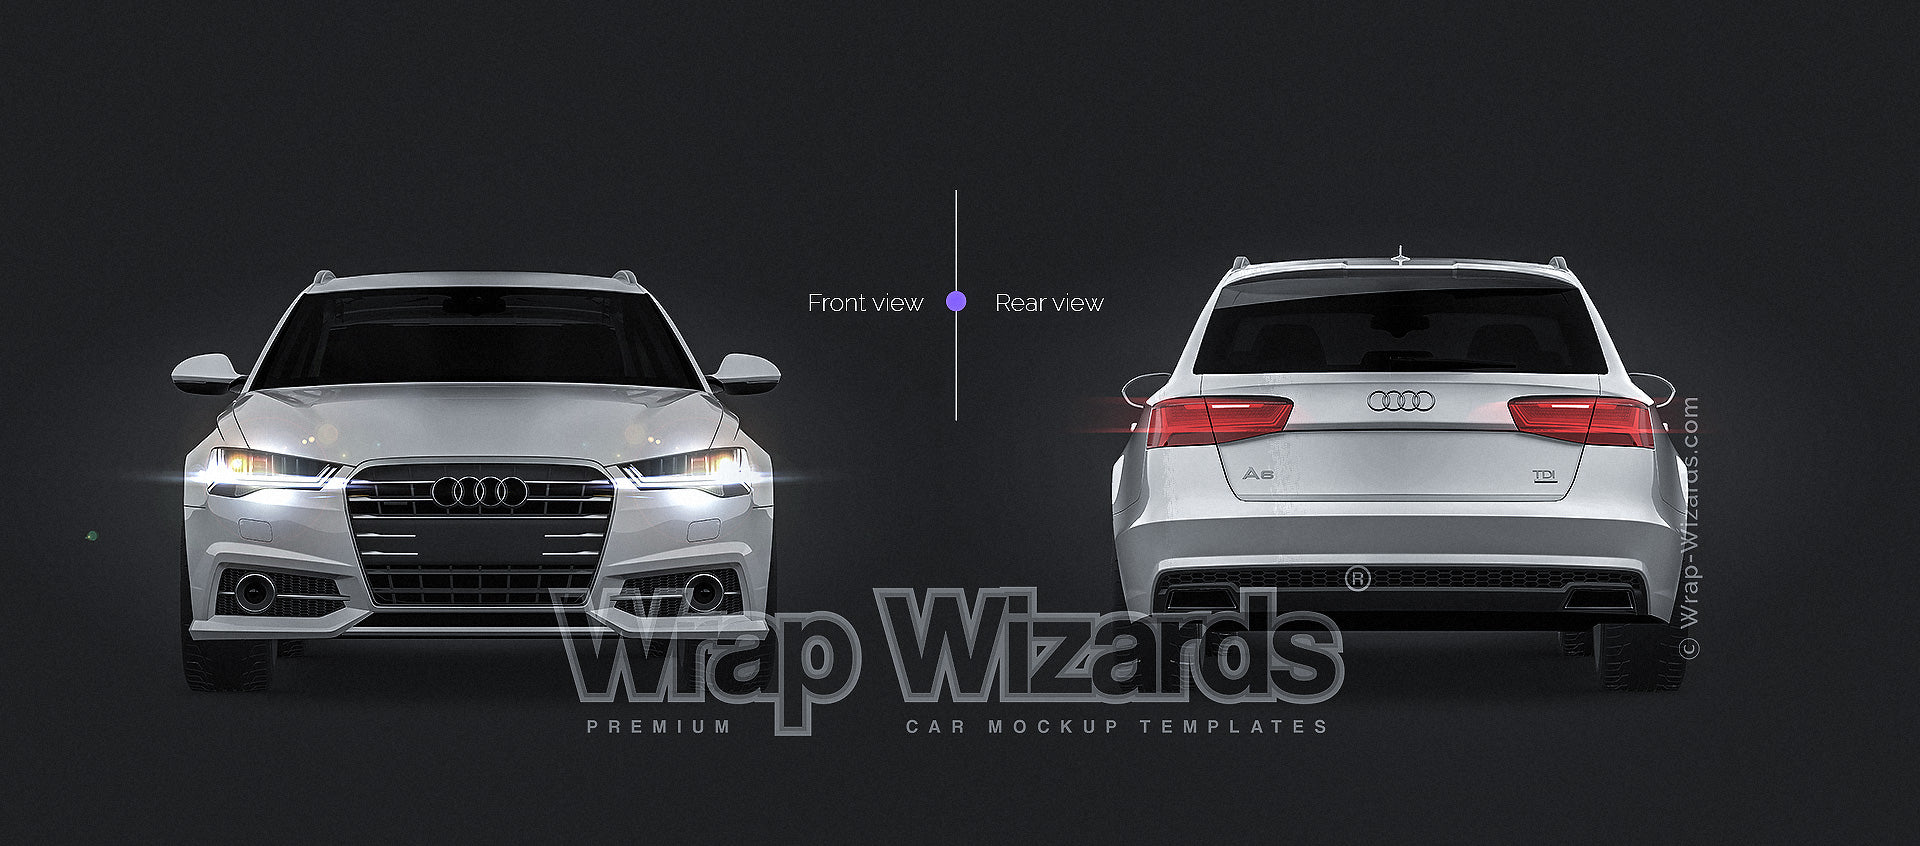 Download AUDI A6 AVANT 2016 all sides Car Mockup Template.psd - Wrap-Wizards.com - Premium Car Mockups ...